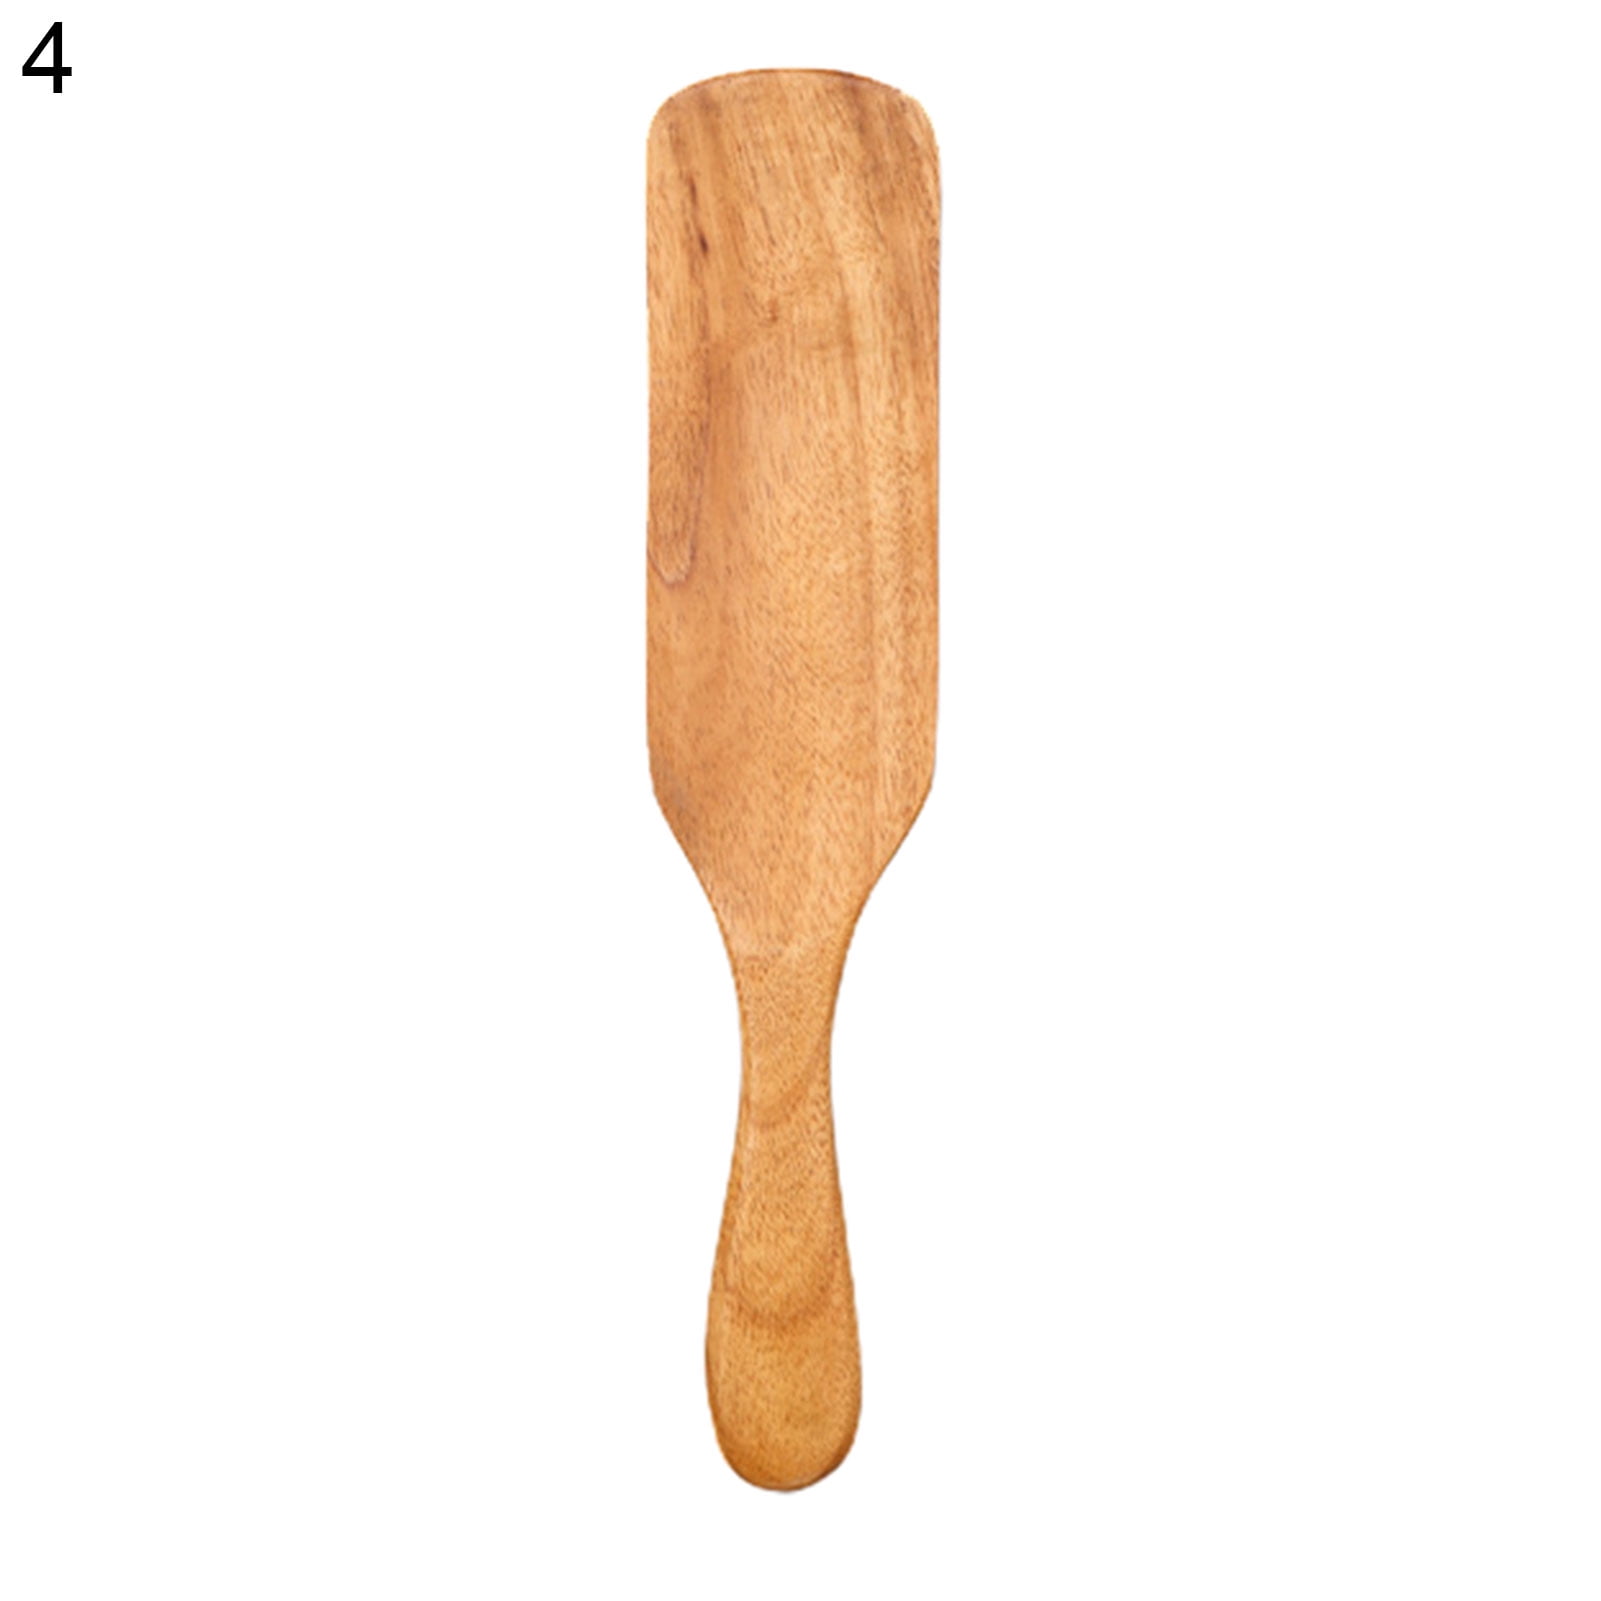 Wooden Spatula for Cooking, Kitchen Set of 4, Natural Teak Wooden Utensils  including Paddle, Turner …See more Wooden Spatula for Cooking, Kitchen Set